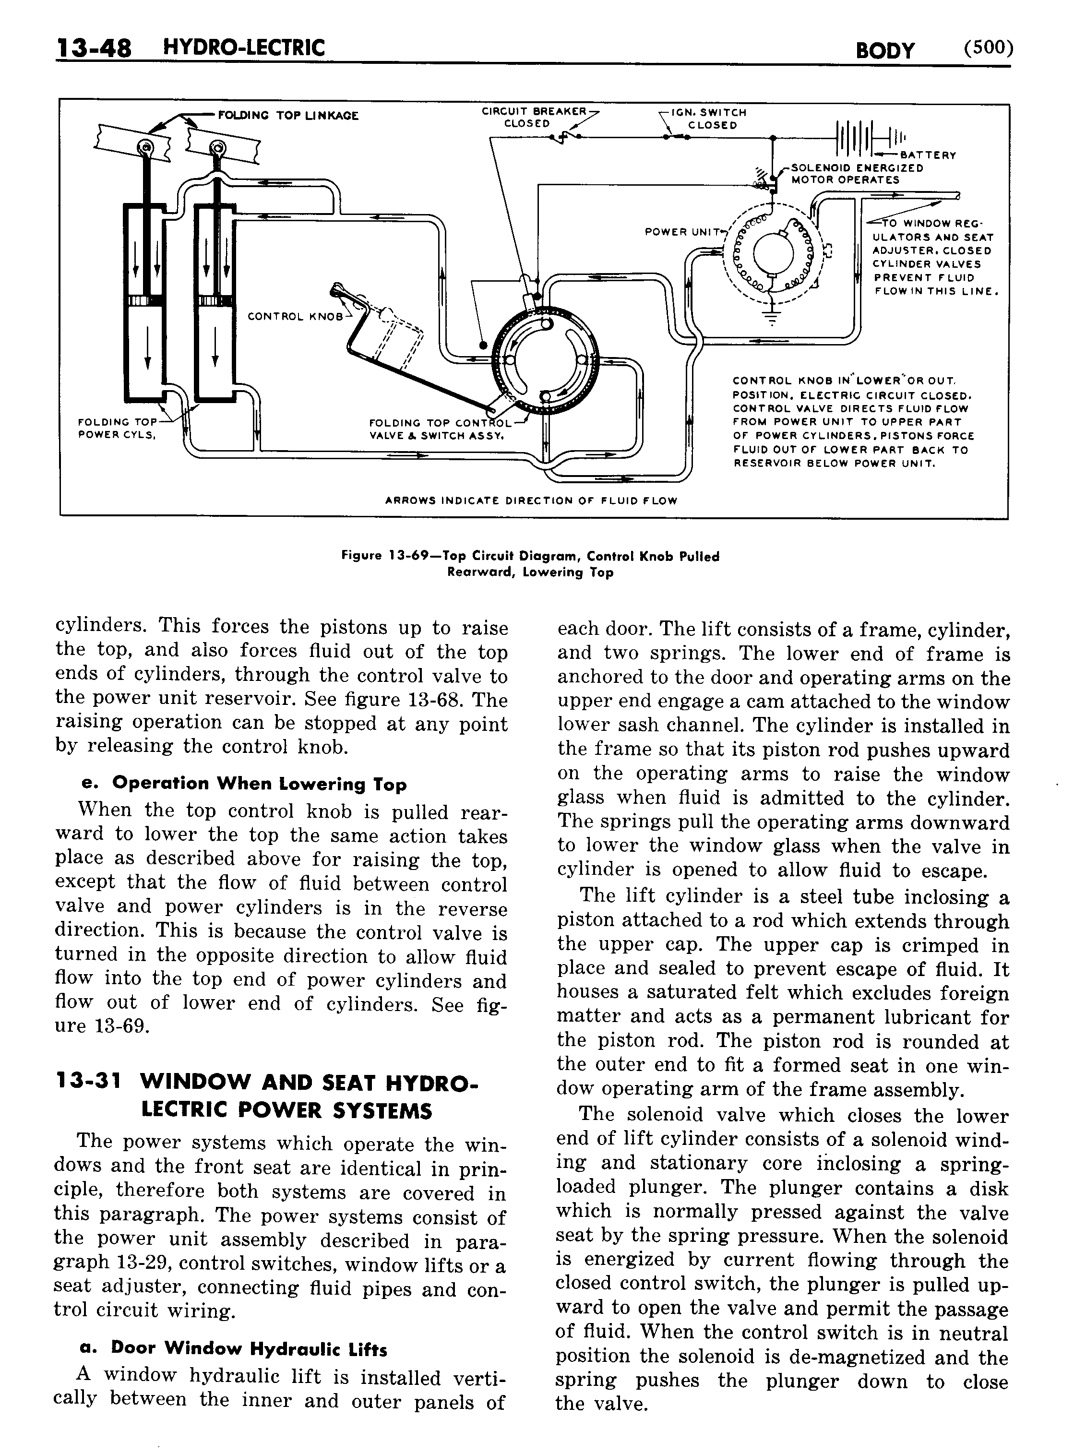 n_14 1948 Buick Shop Manual - Body-048-048.jpg